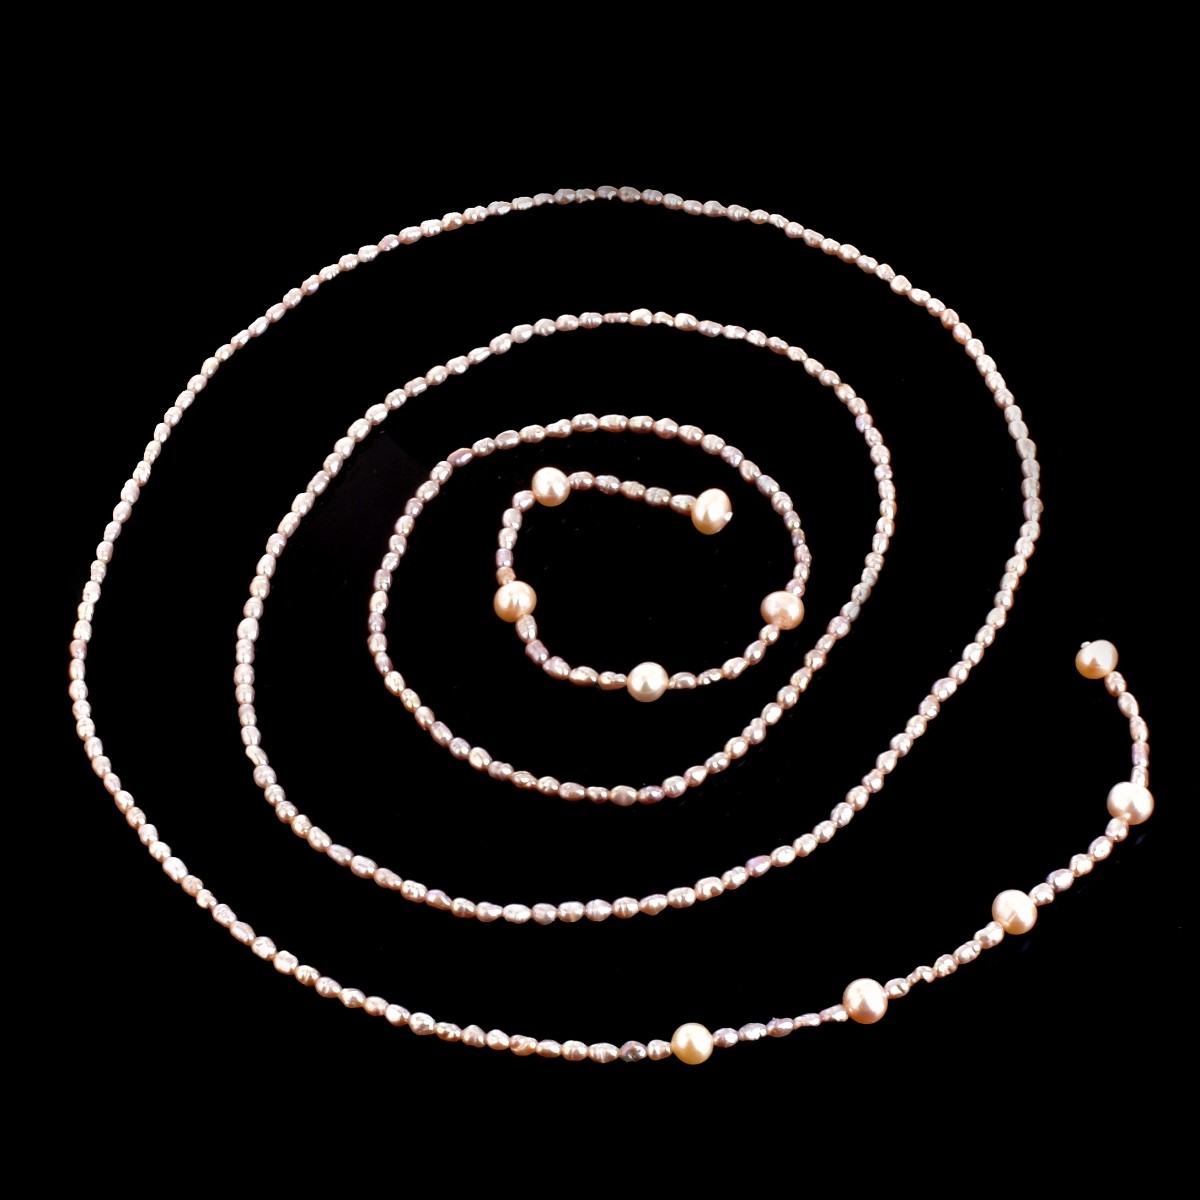 Two Baroque Pearl Necklaces